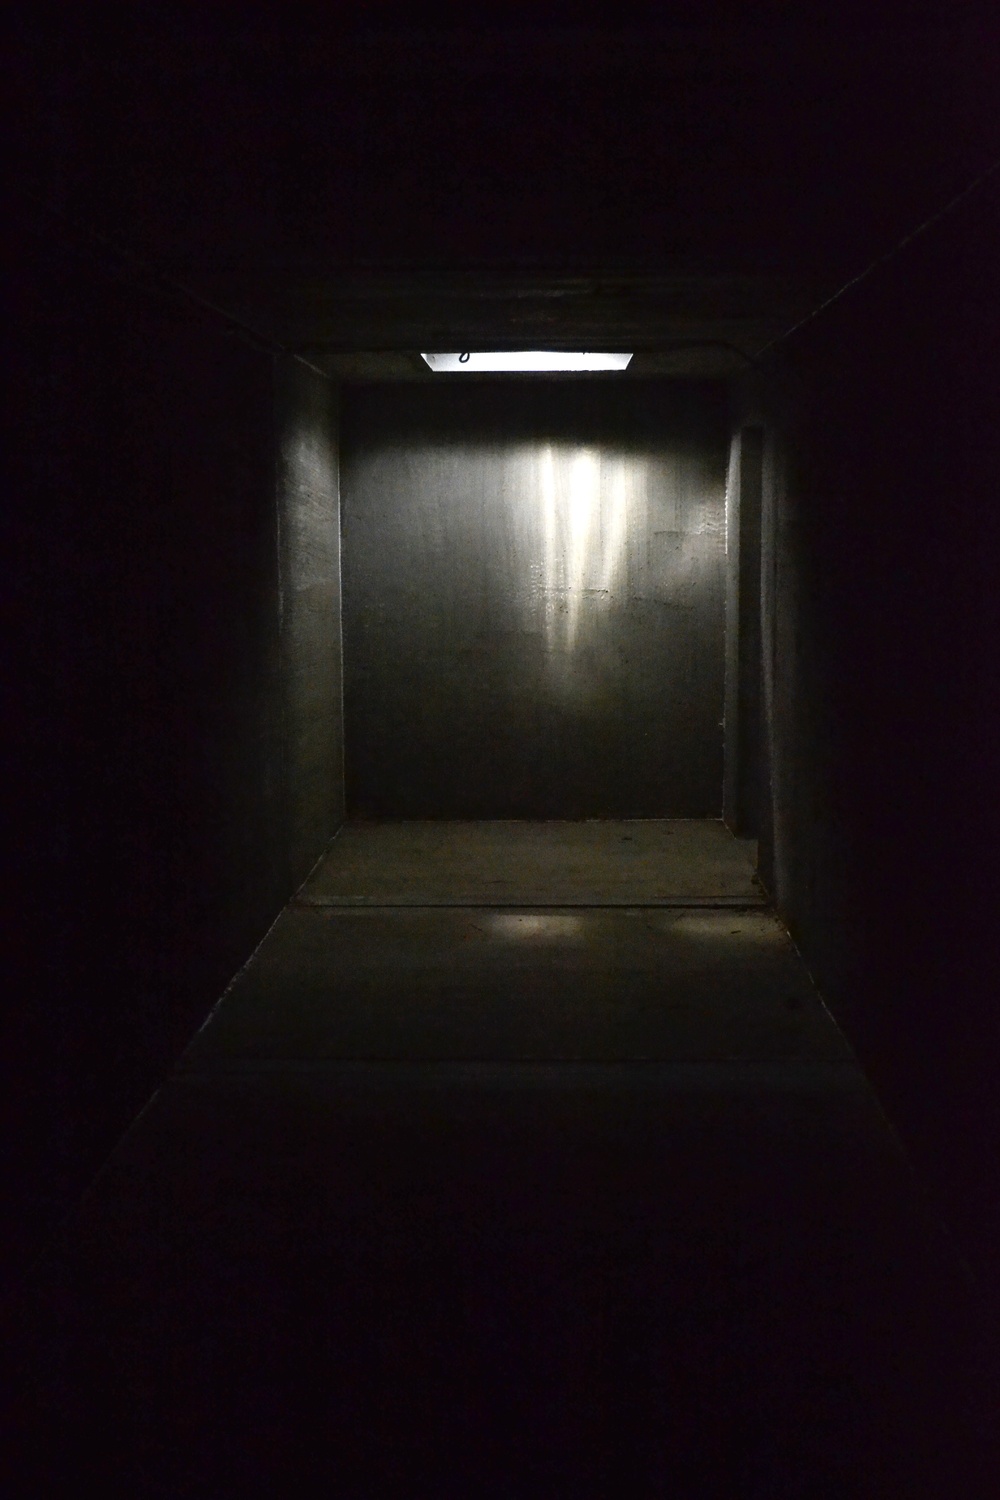 Tunnel rats: Warfighters can now train in subterranean warfare